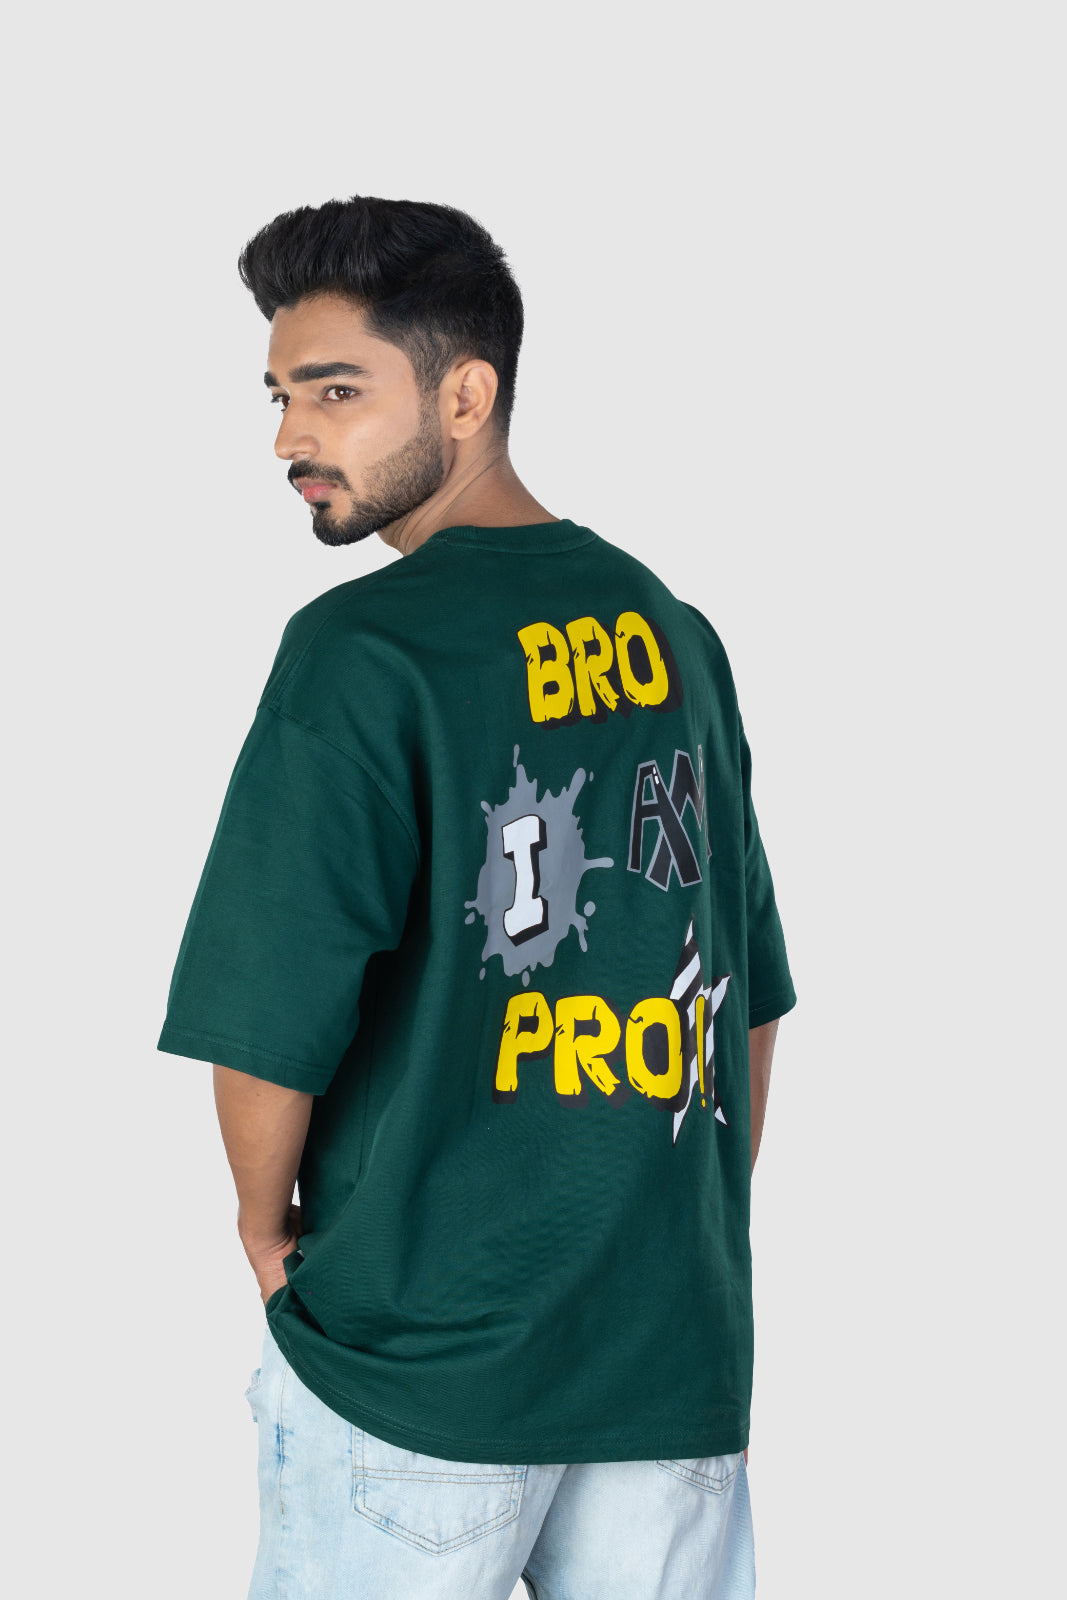 BRO I AM PRO- MEN- GREEN- BACK